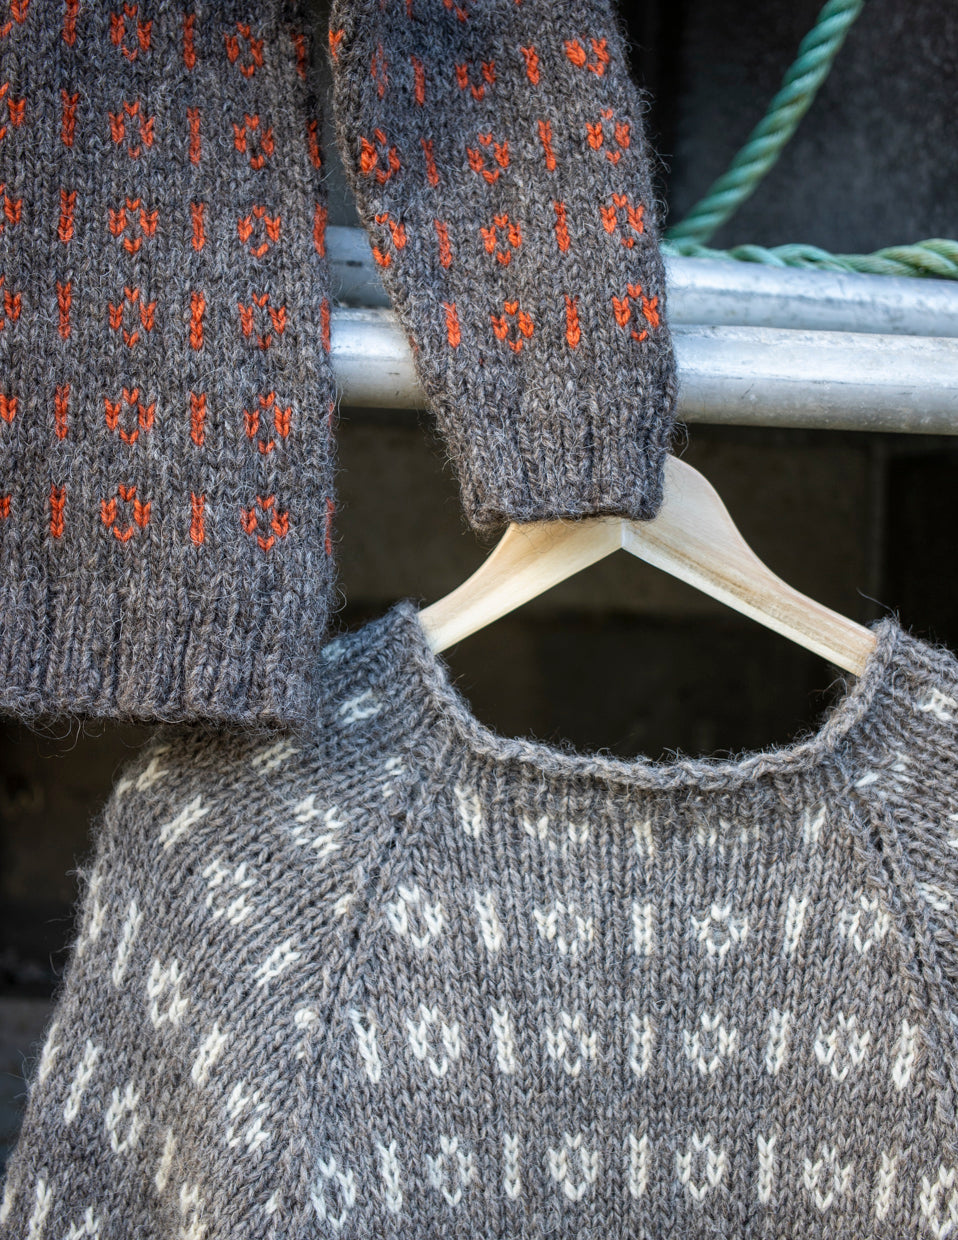 Knut sweater, knitting kit, plant-dyed